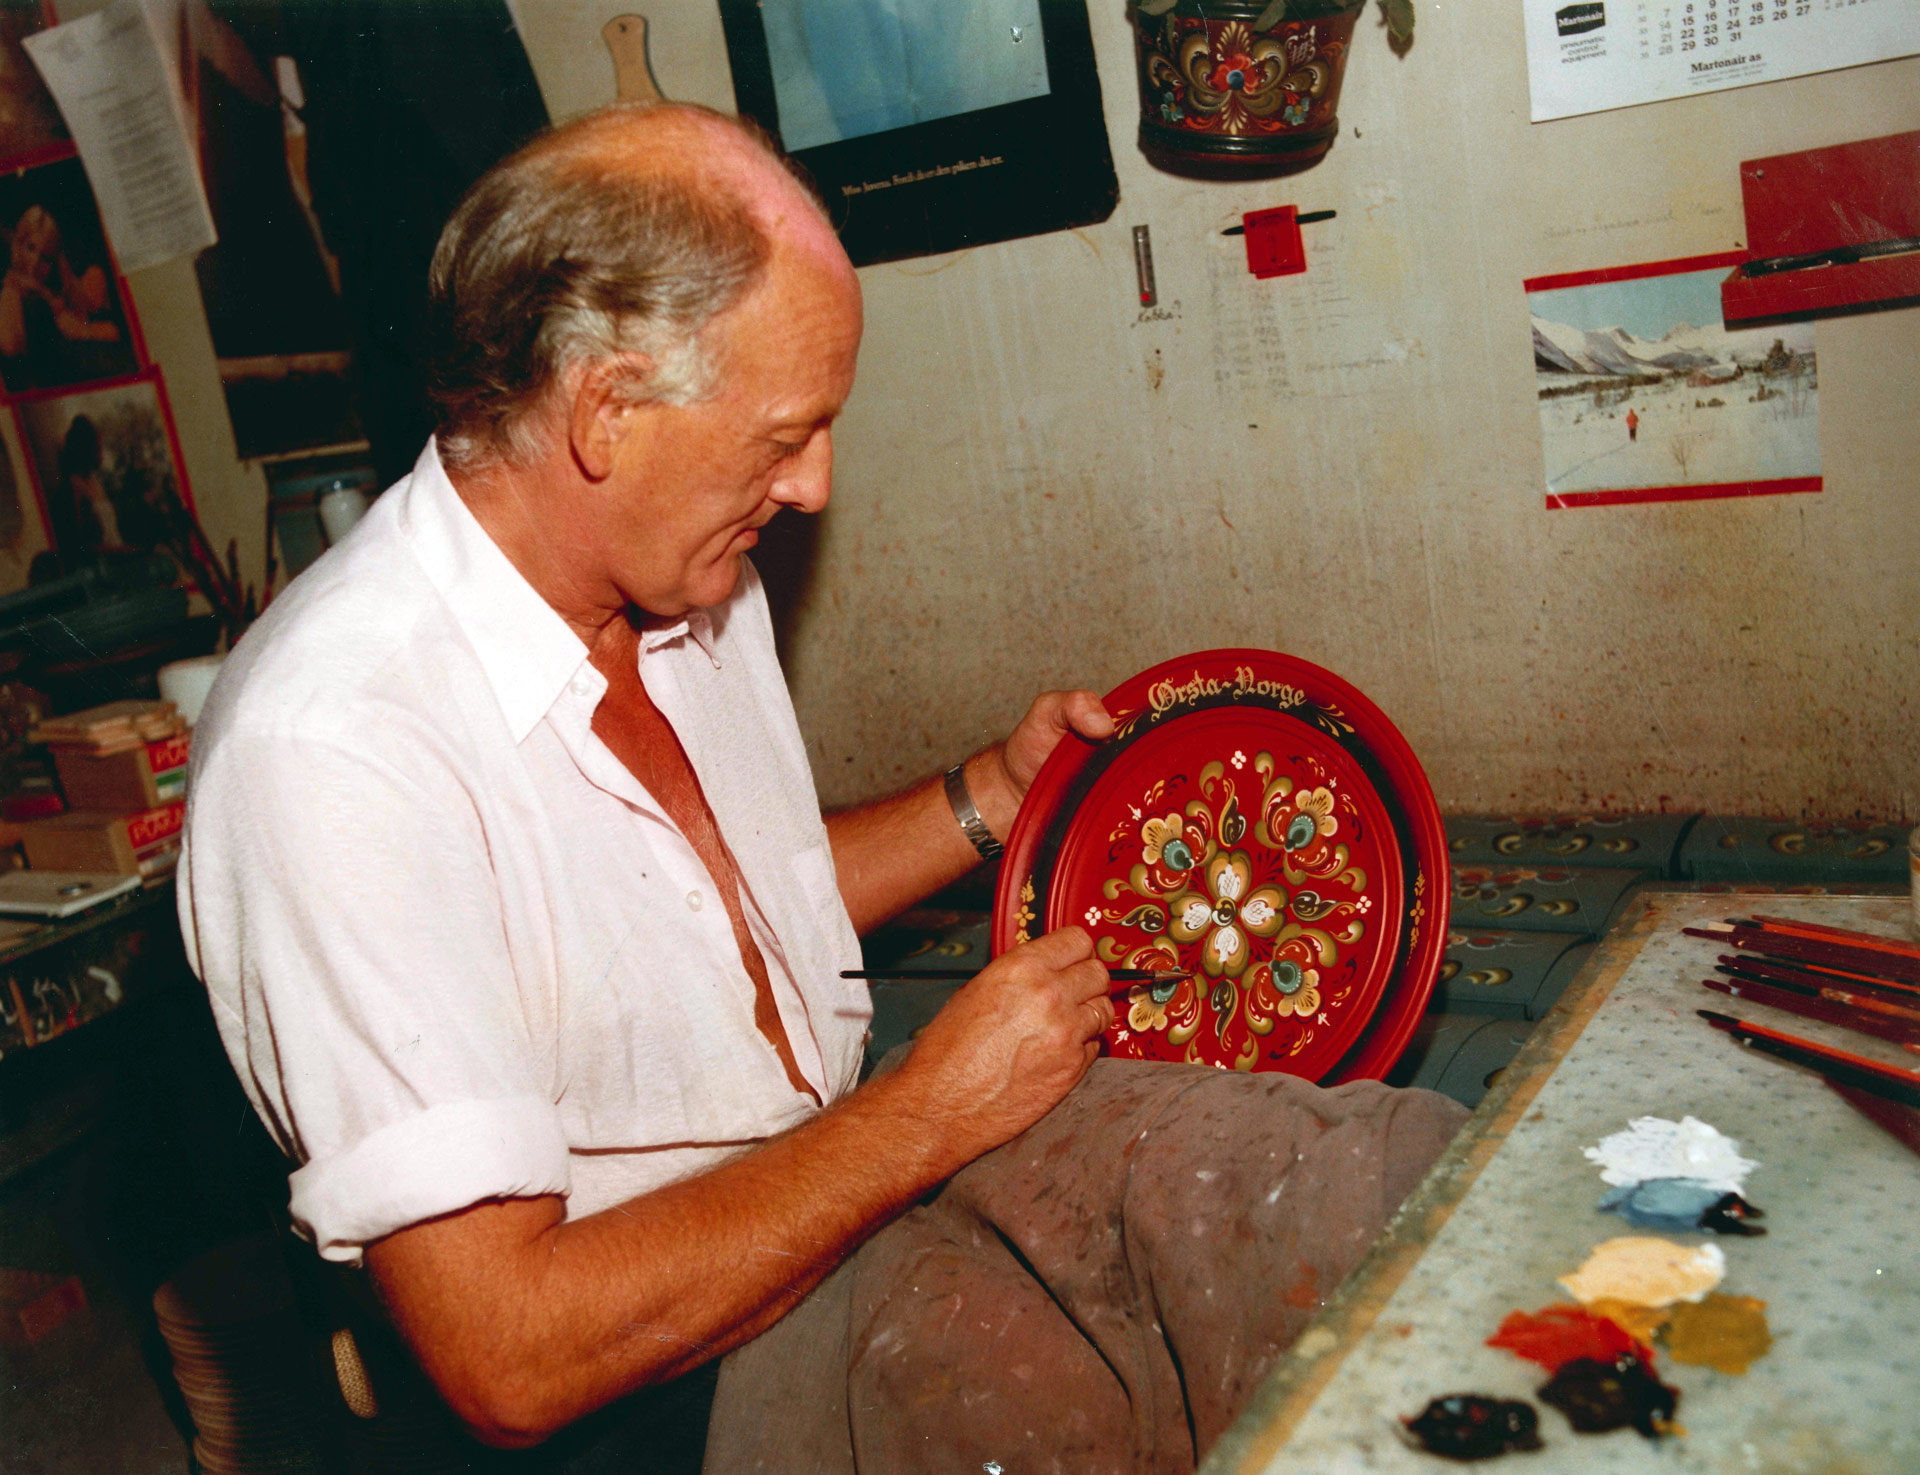 Rosemåling: Knut Rishaug var ein av dei som dekorerte souvenirane og pyntetinga frå Brødr. Øyehaug. Foto frå Jubileumsboka